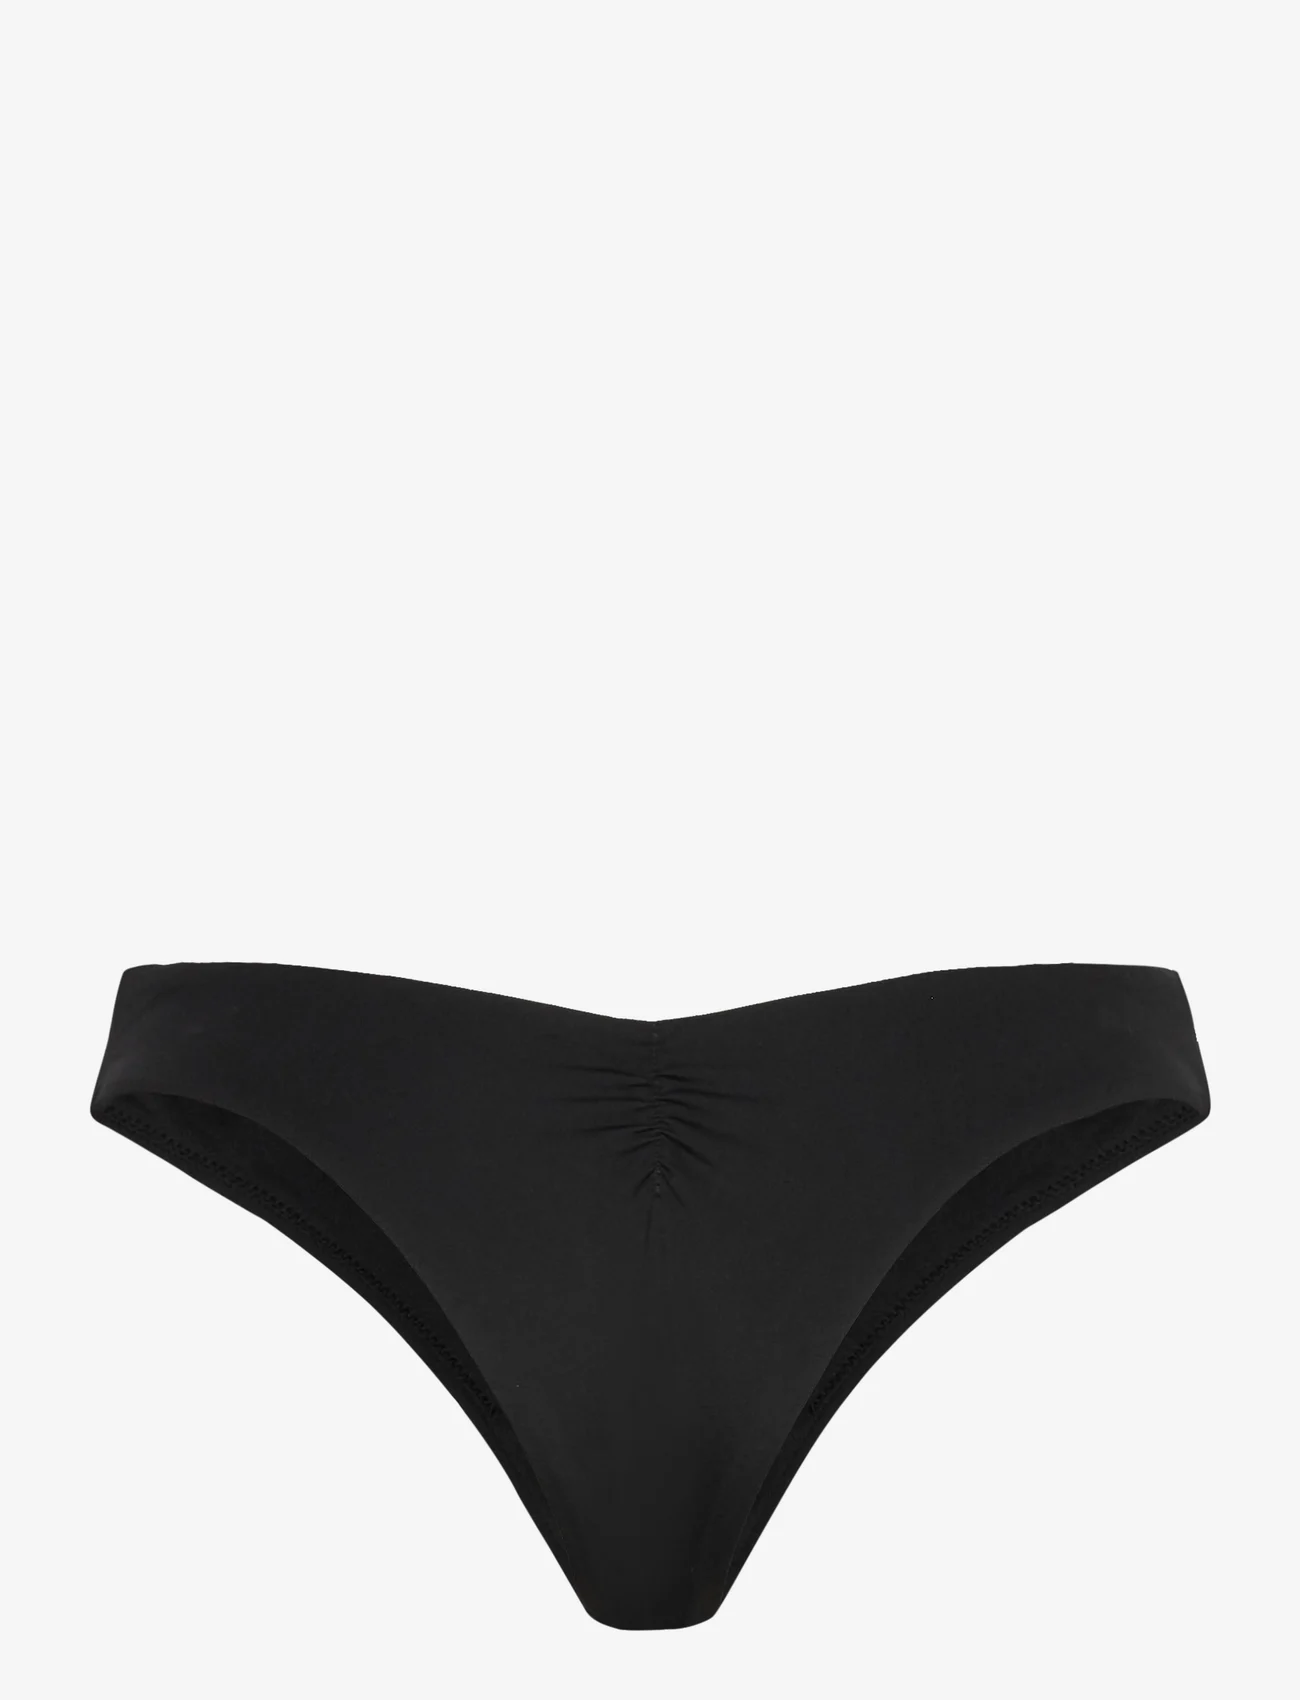 Seafolly - S.Collective High Cut Rio - bikini briefs - black - 1